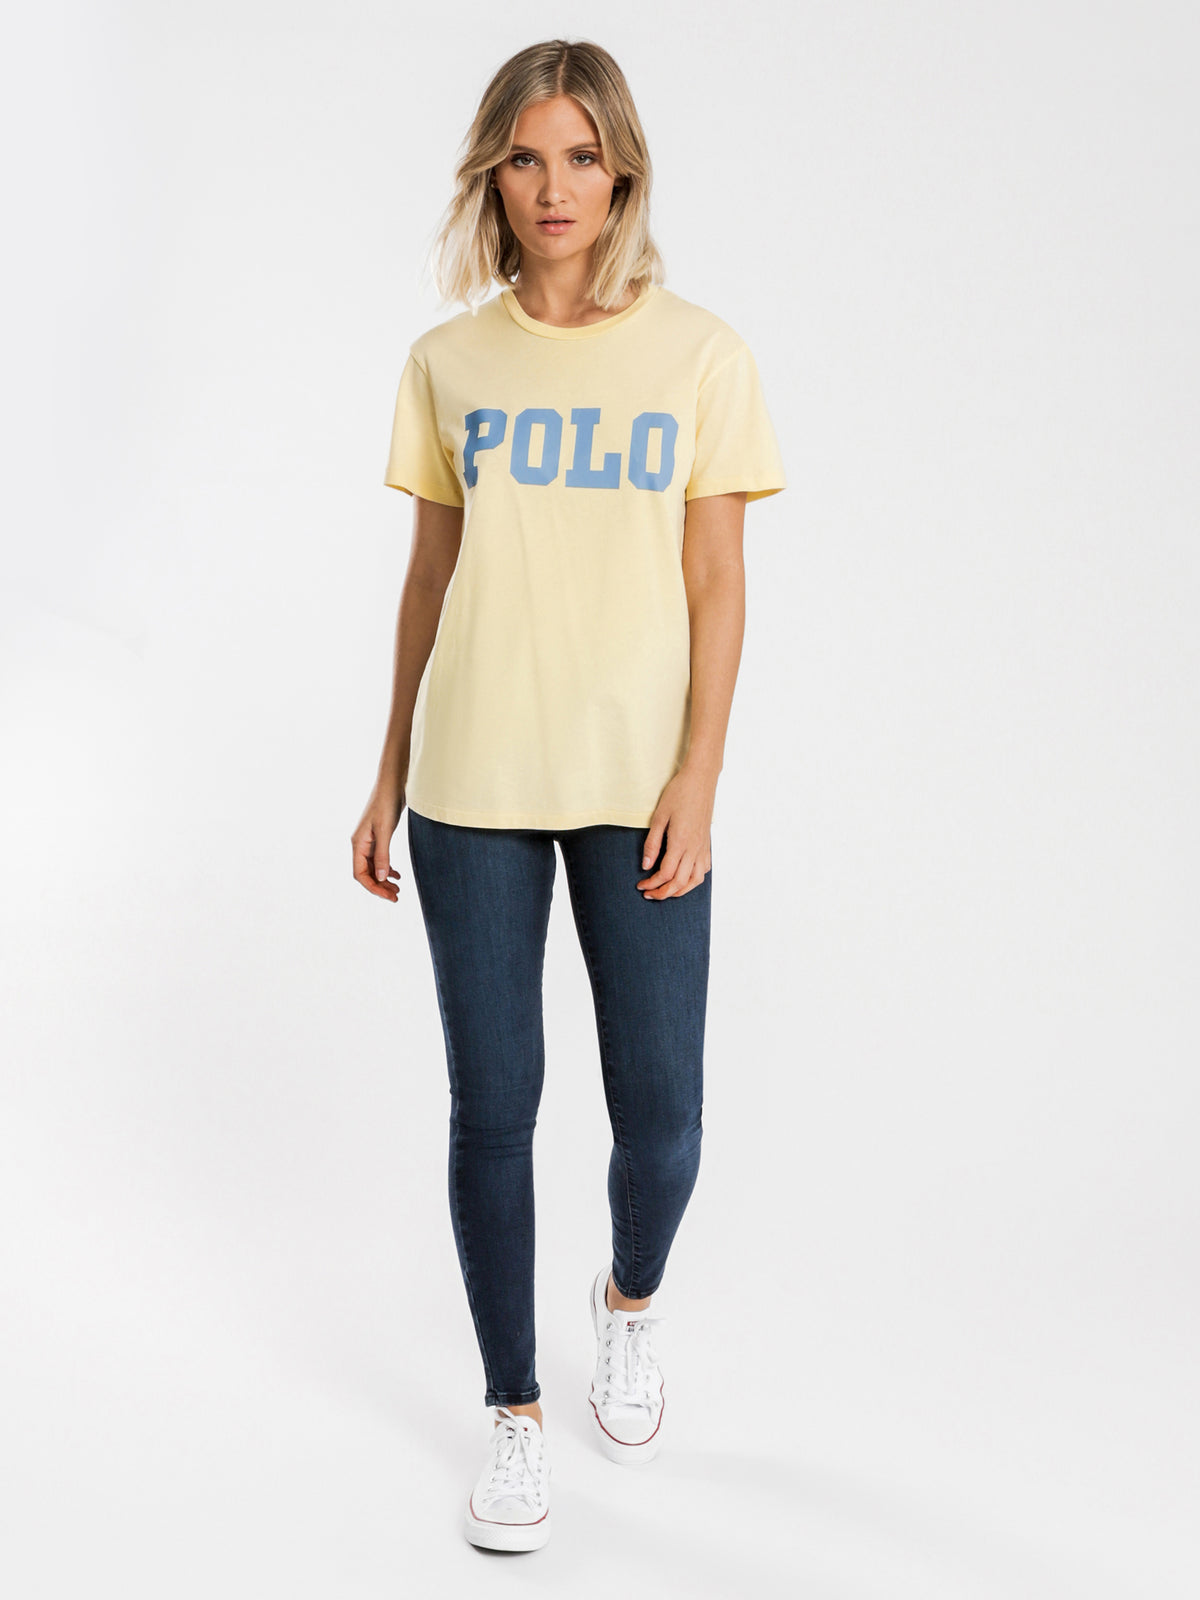 Big Polo Logo T-Shirt in Banana Peel Yellow